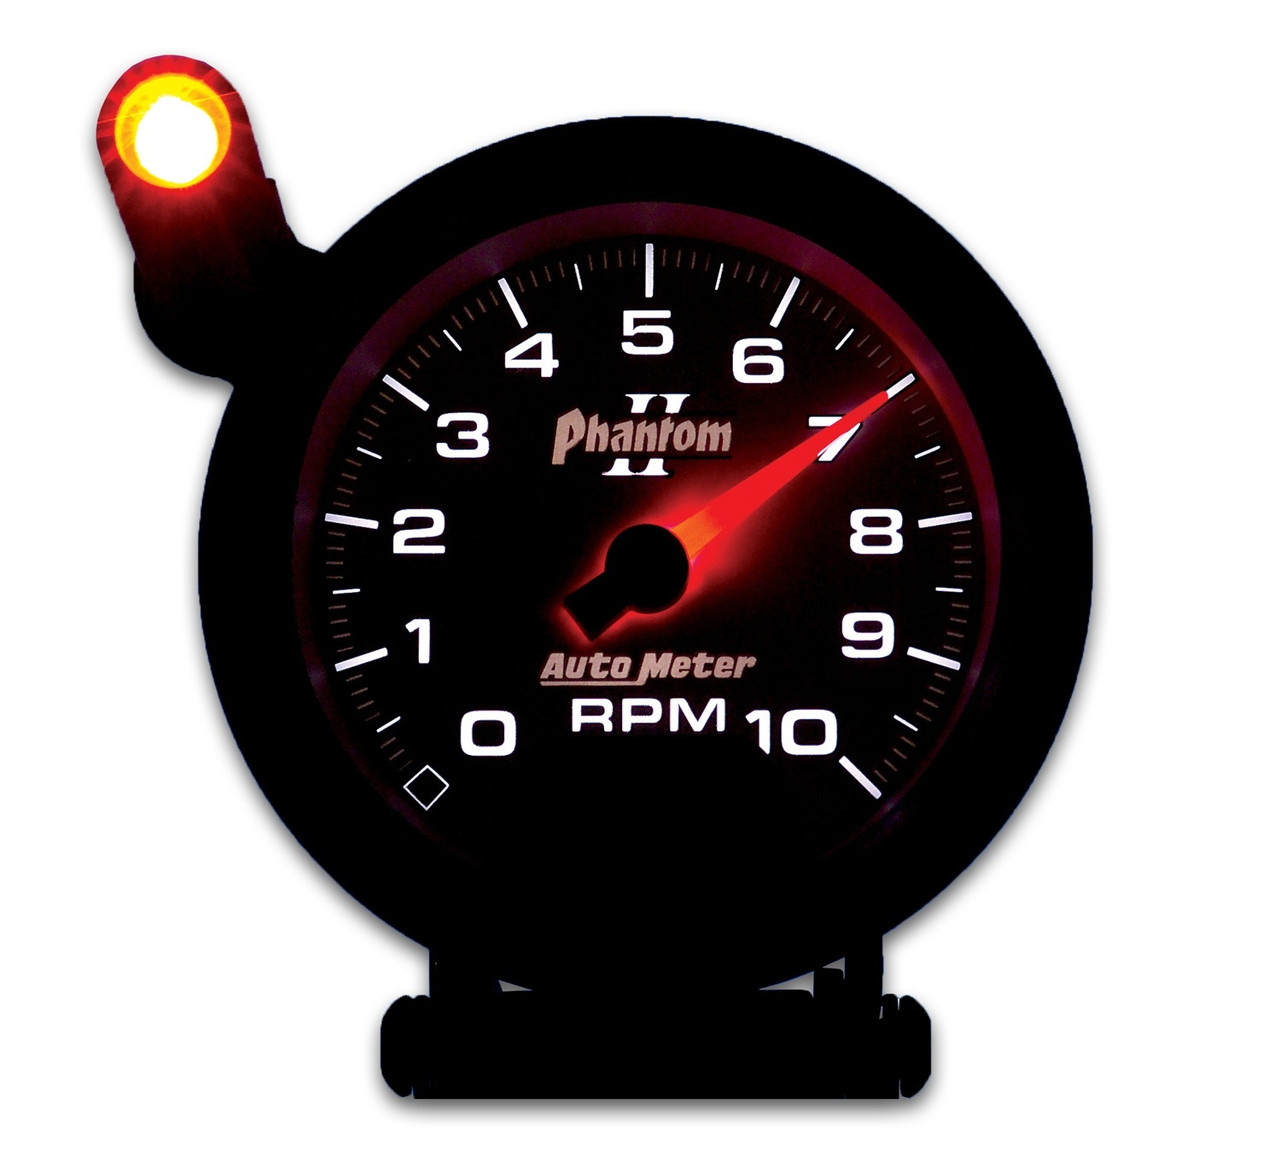 AutoMeter 7590 Phantom II Tachometer